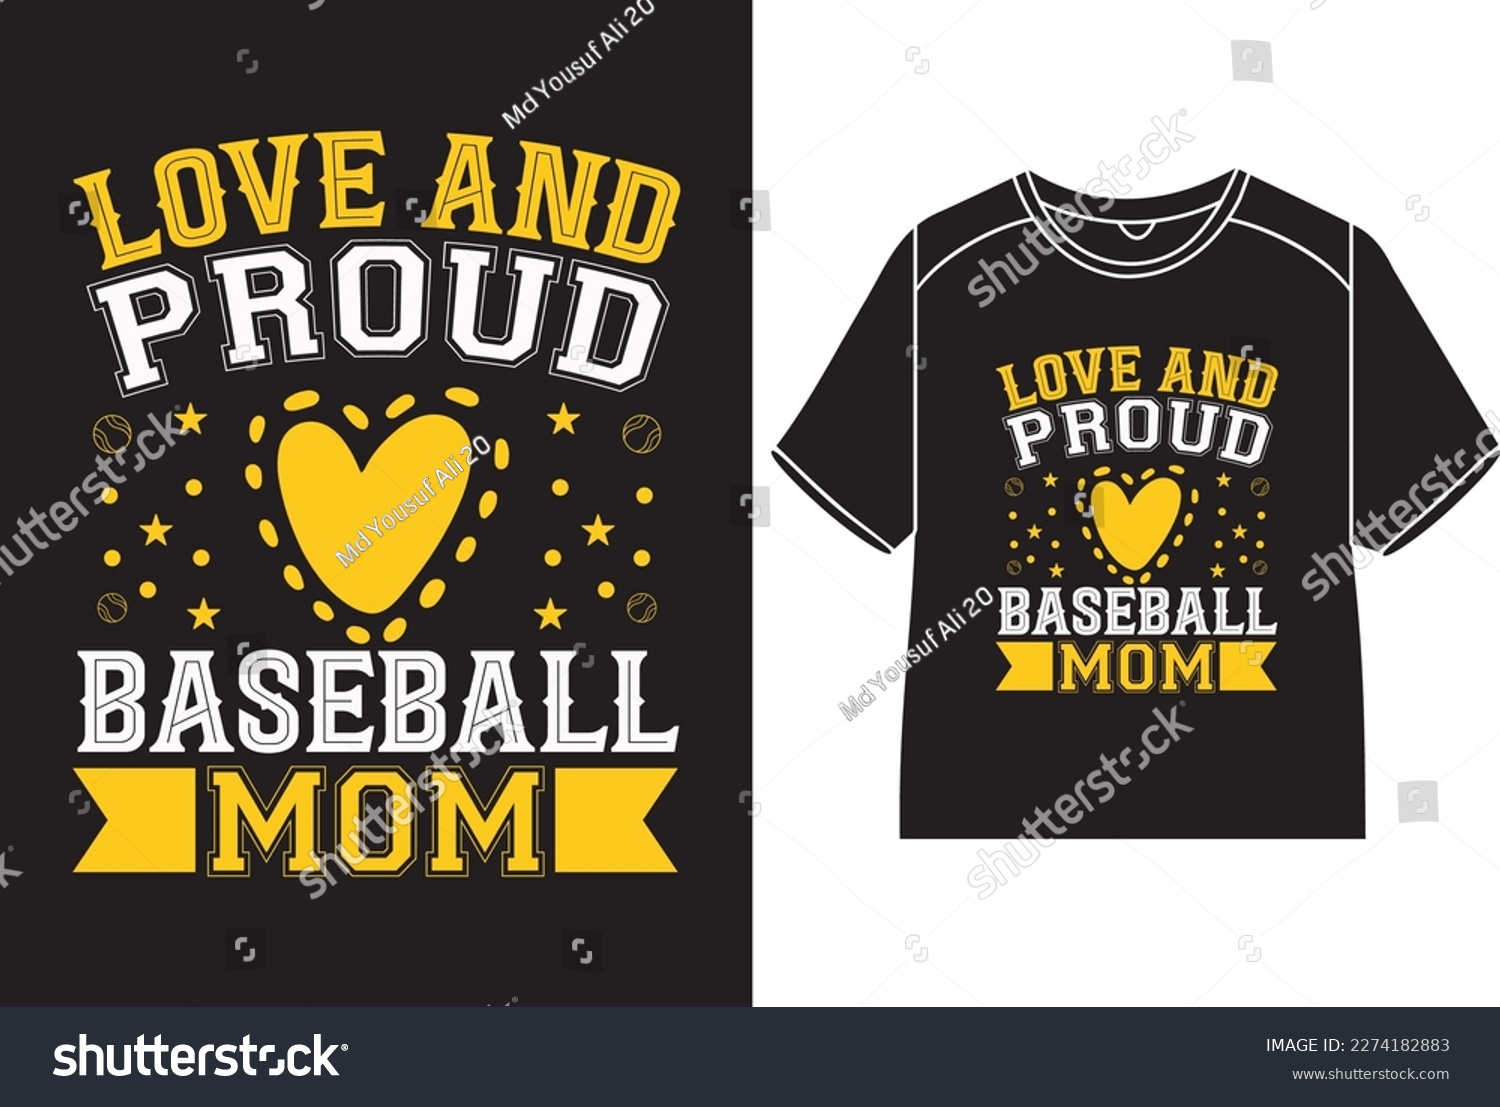 SVG of Love and proud baseball mom T-Shirt Design svg